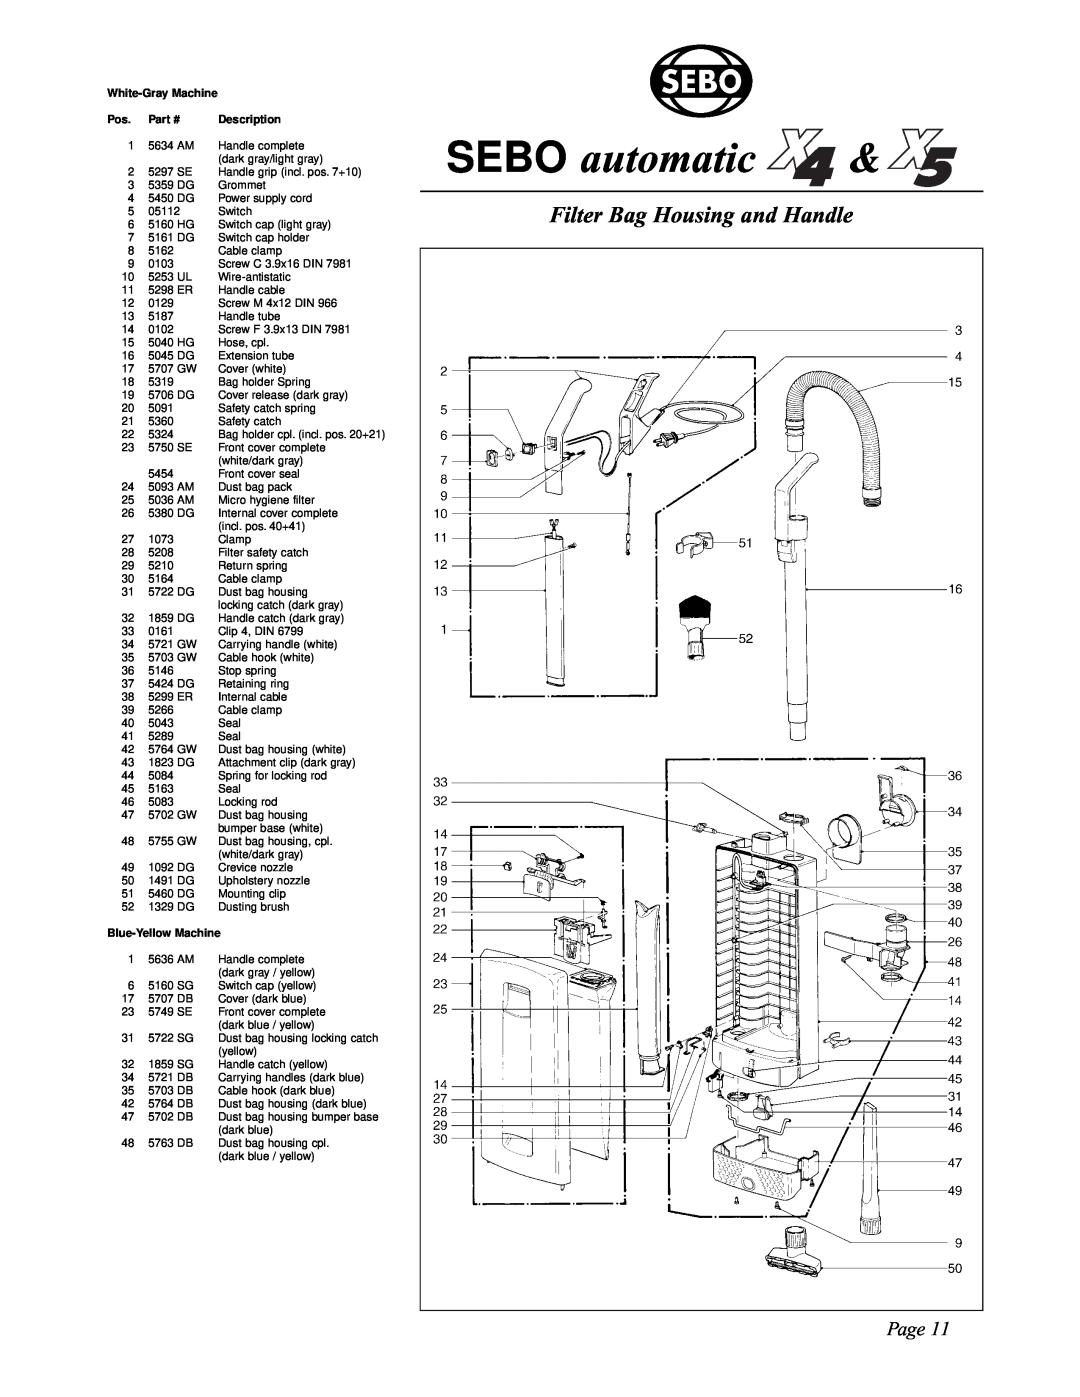 Sebo X4, X5 manual SEBO automatic, Filter Bag Housing and Handle, Page, Description, Blue-YellowMachine 